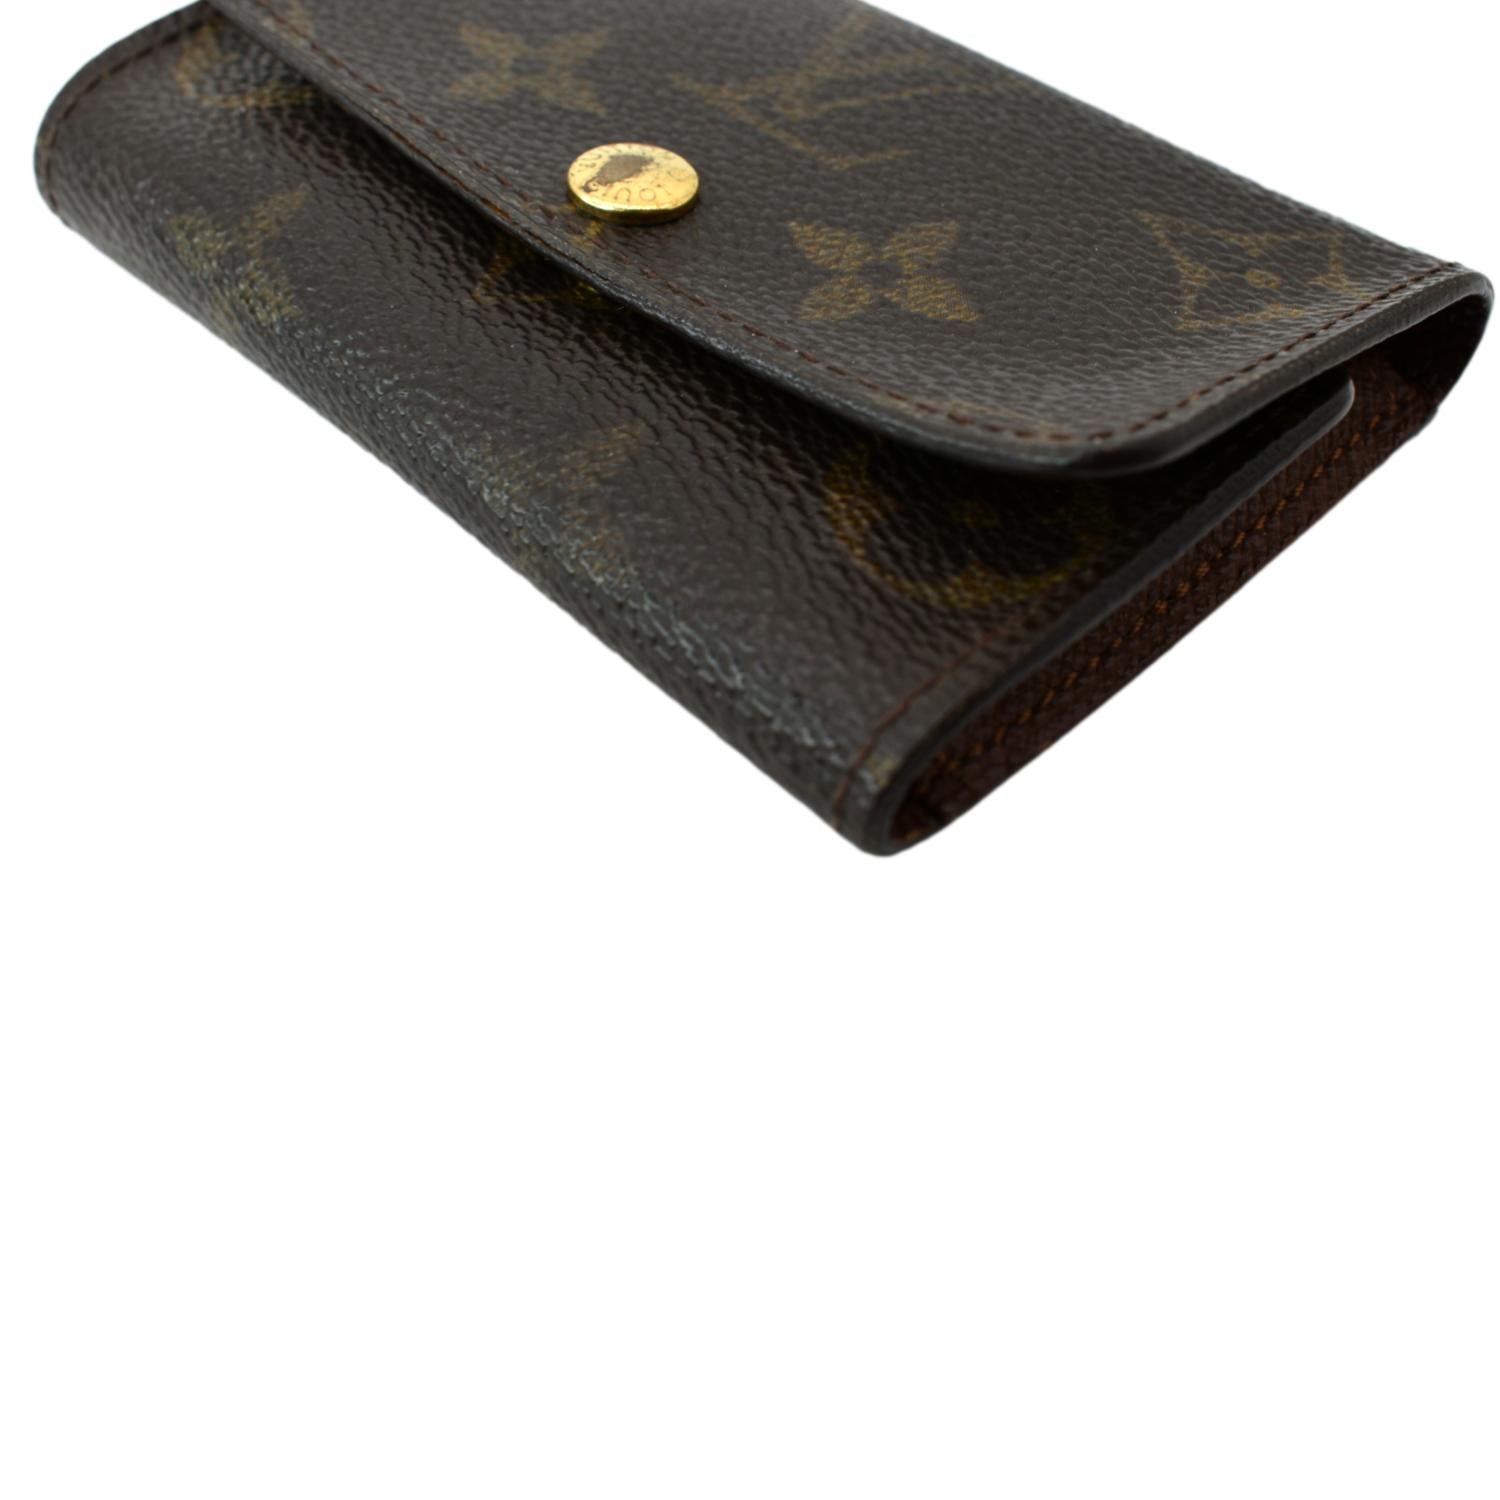 Louis Vuitton Monogram Monogram Canvas Leather Folding Wallet Card Holders, Black